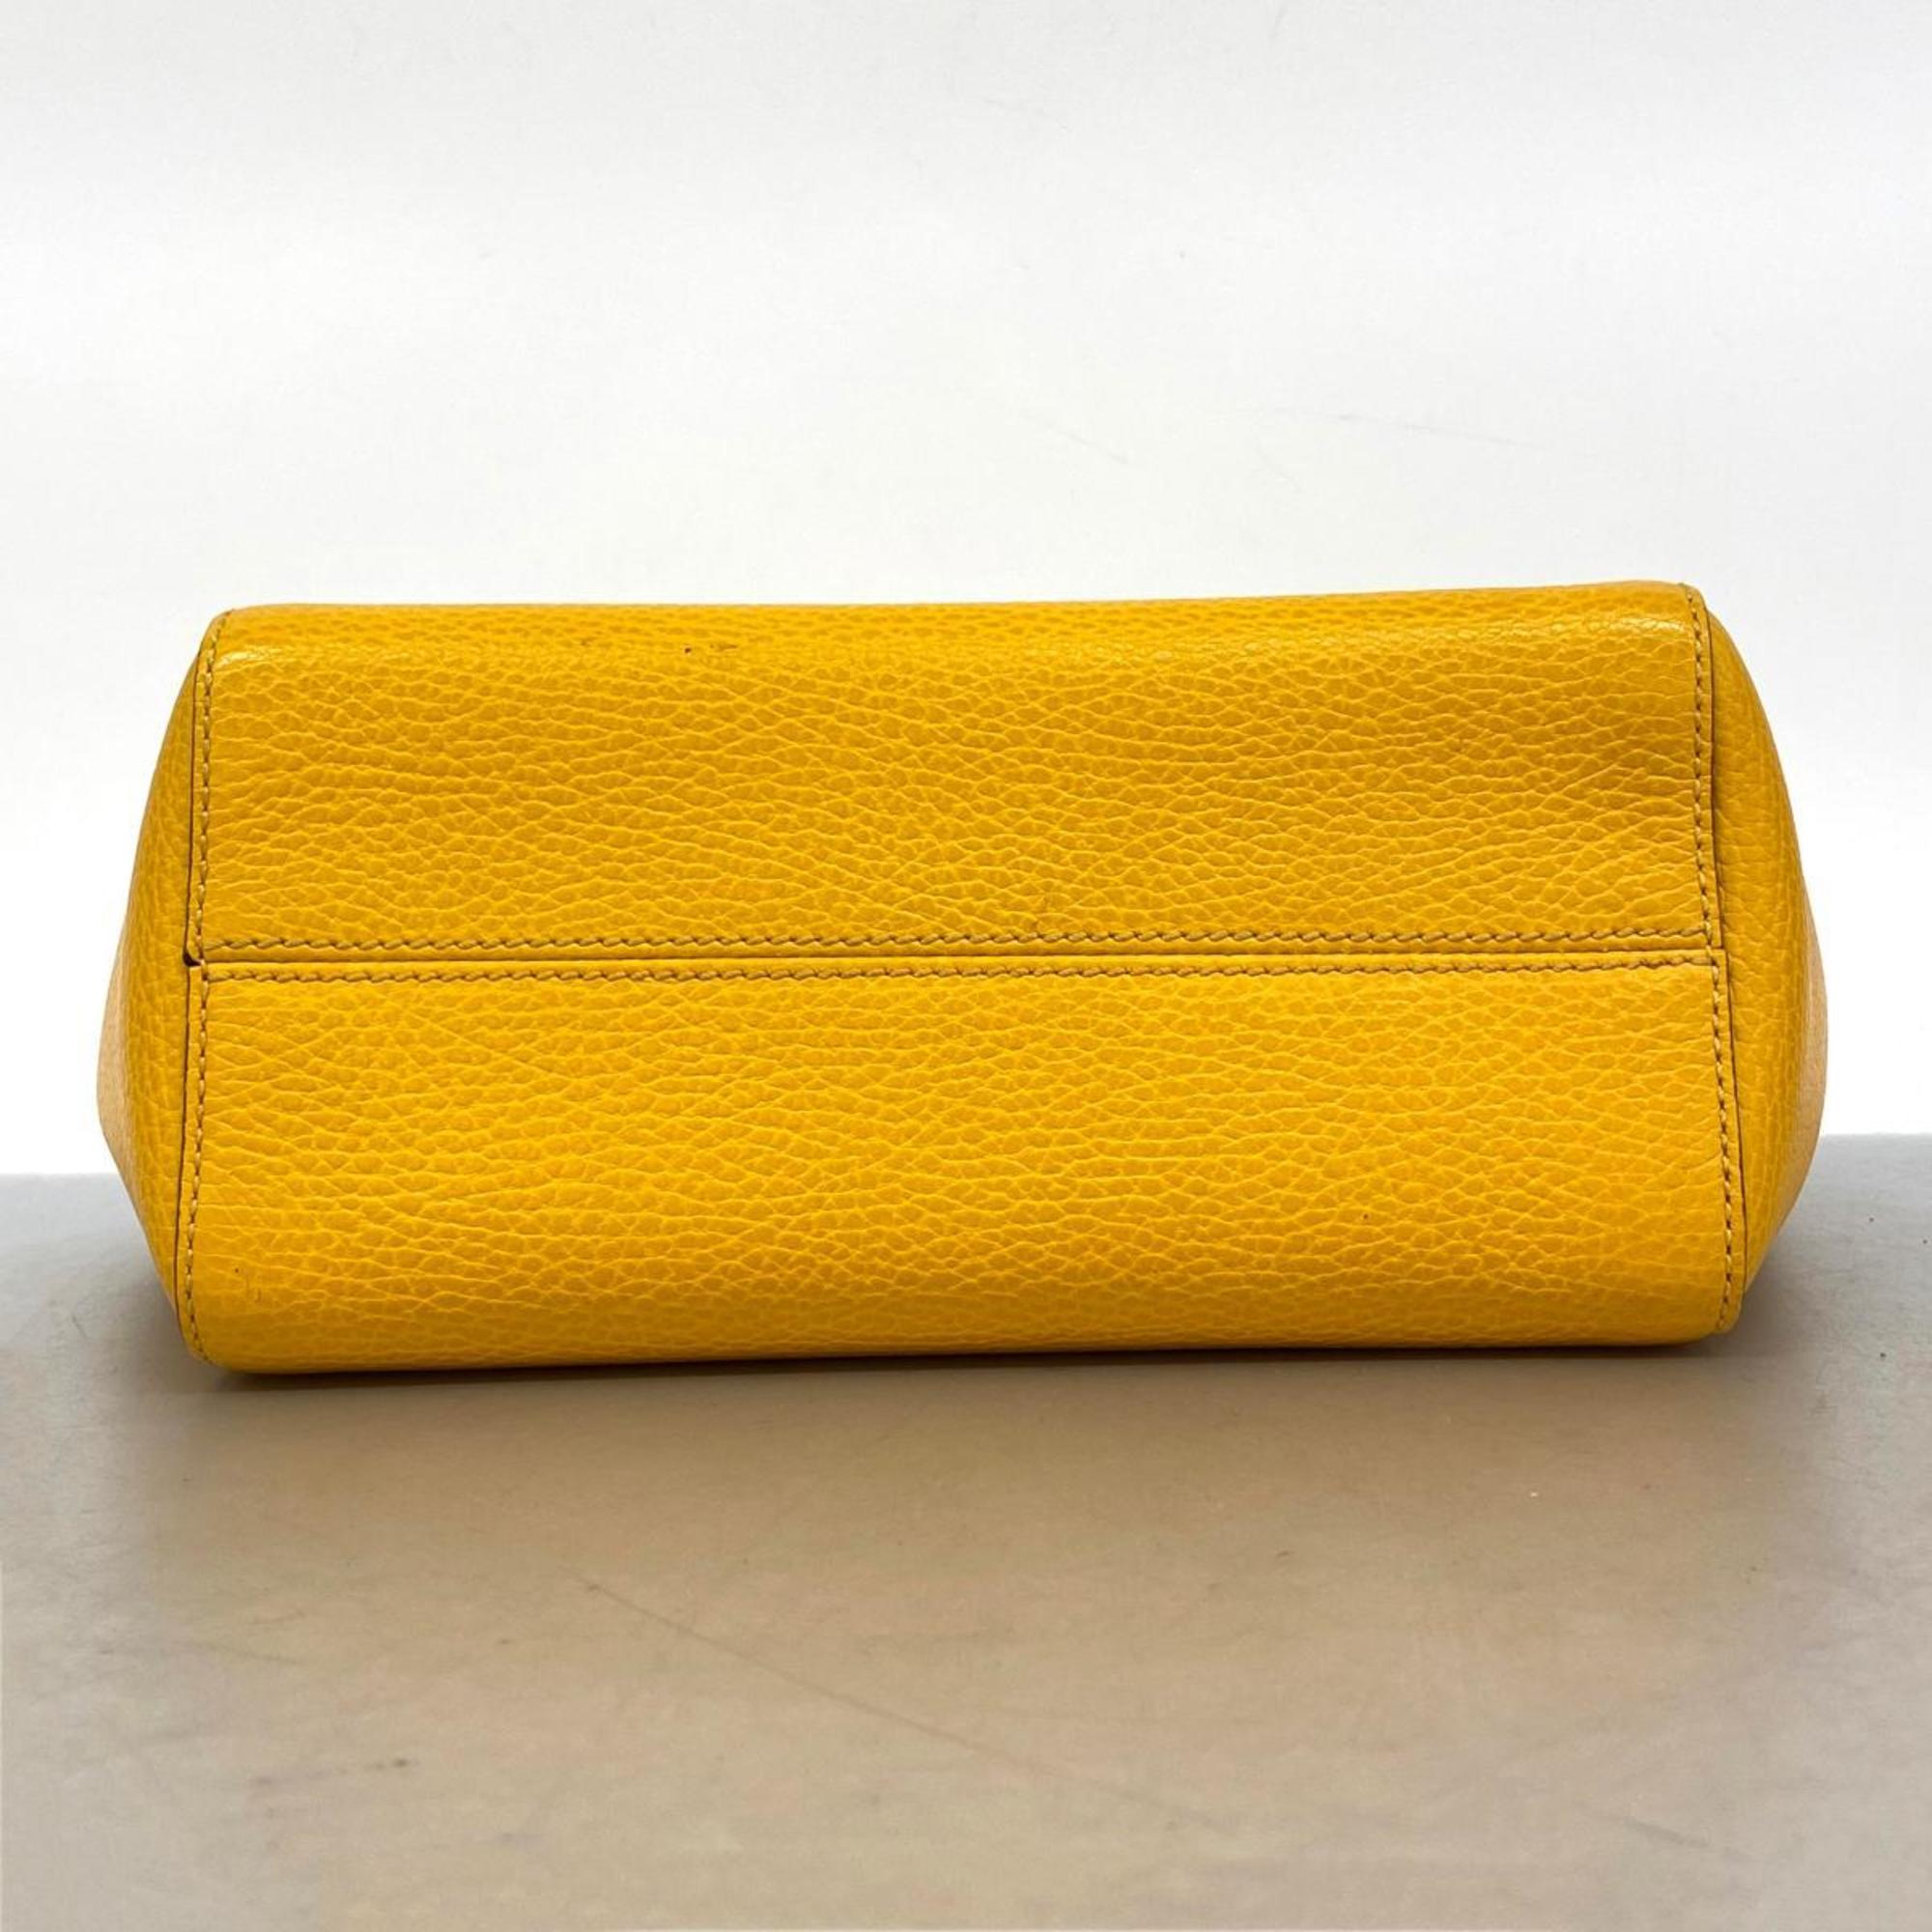 Gucci handbag 368827 leather orange champagne ladies